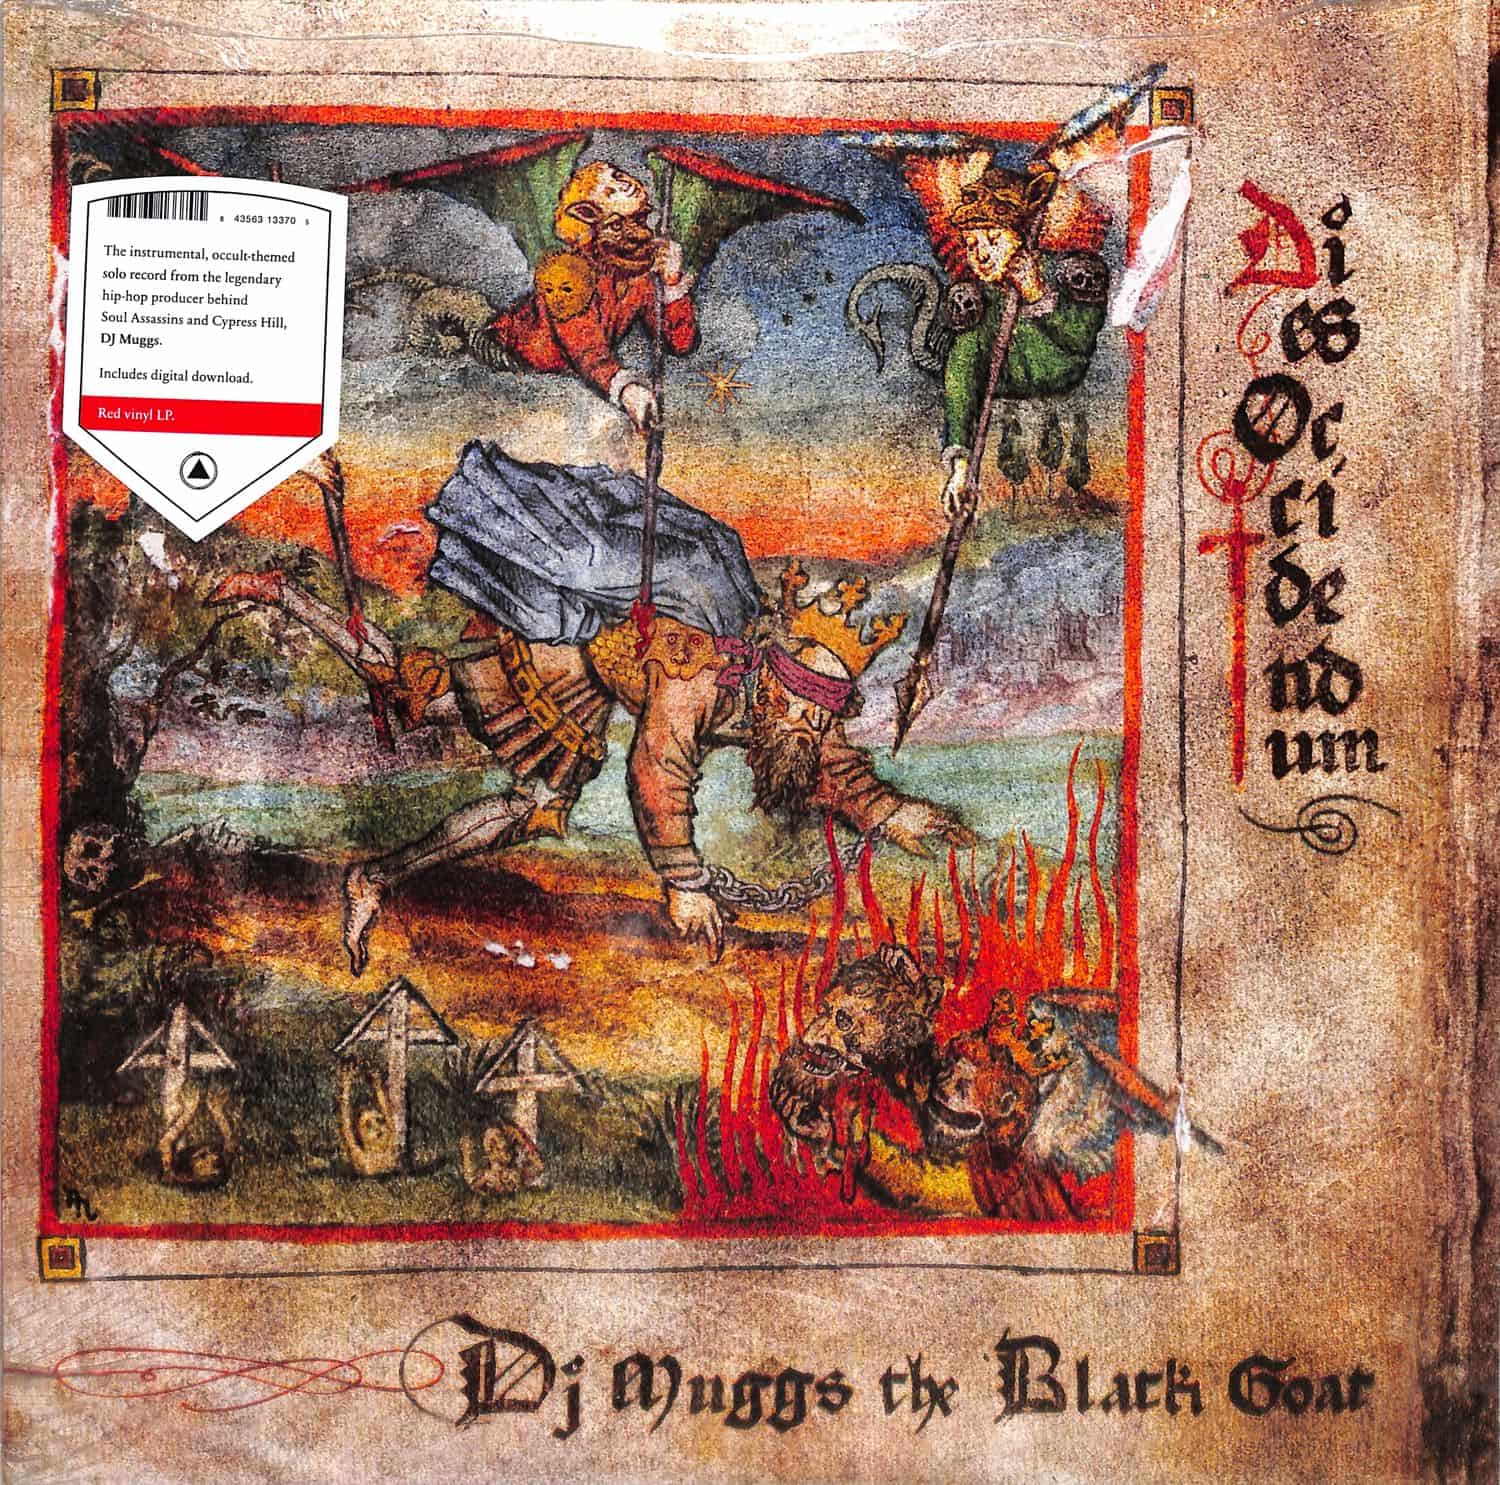 DJ Mugs The Black Goat - DIES OCCIDENDUM 